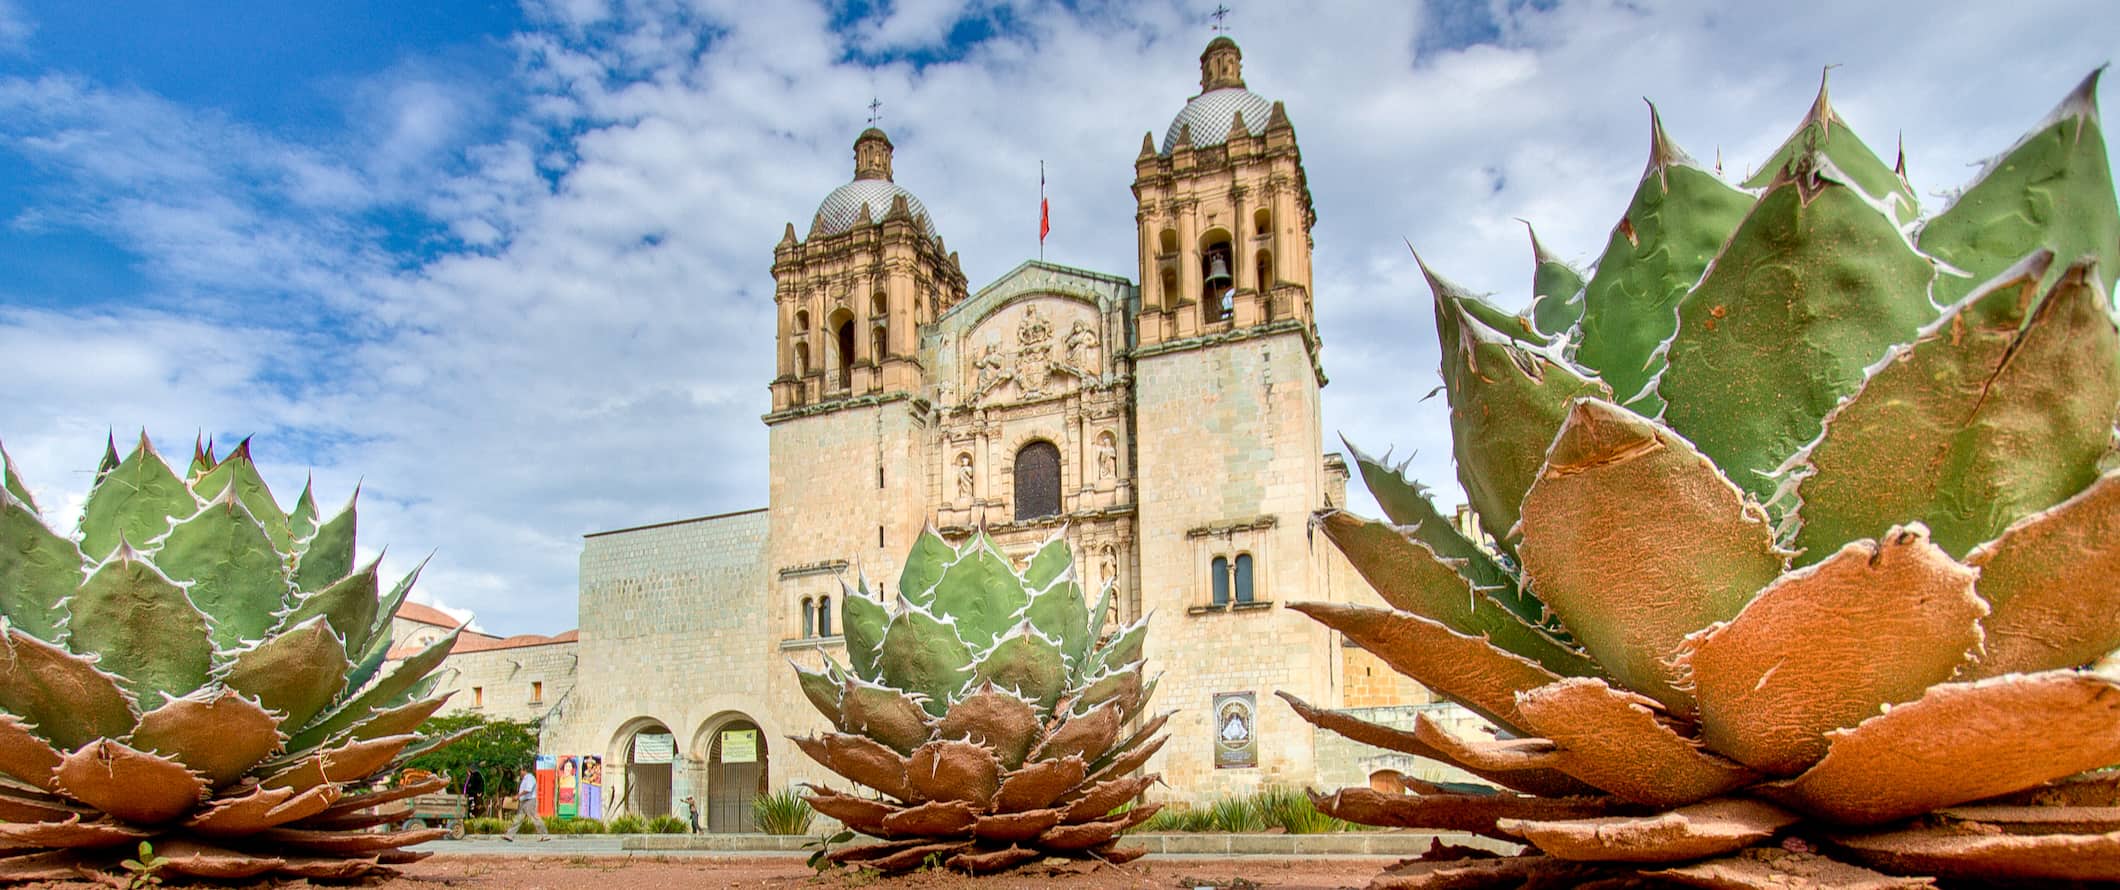 Famosa igreja antiga com vista para a cidade de Oaxaca, México